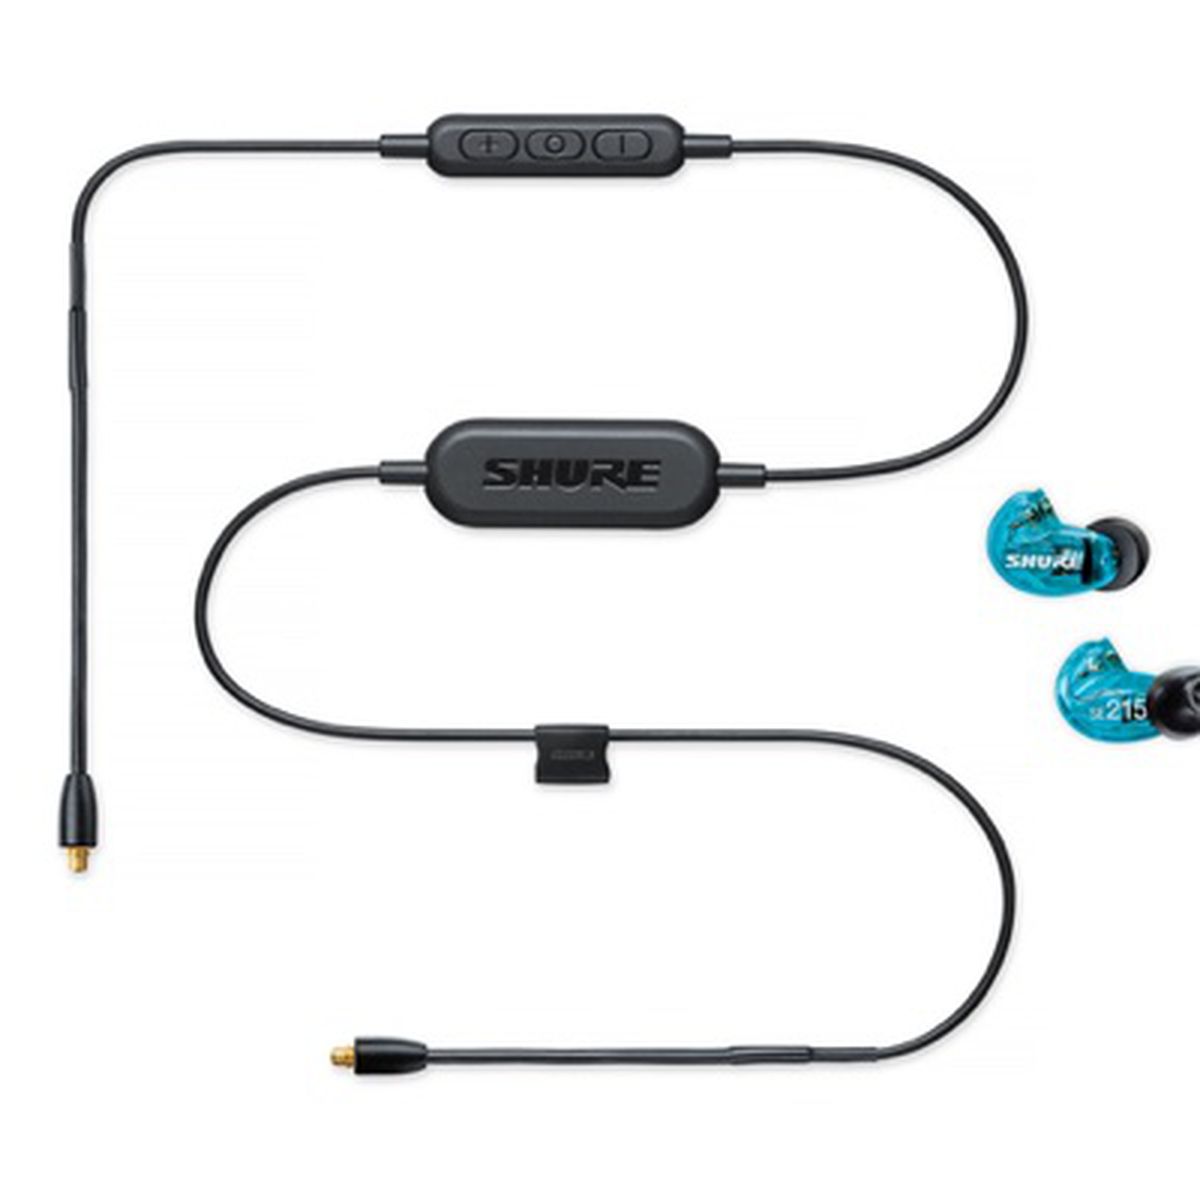 Shure Announces First Bluetooth Wireless Earphones -